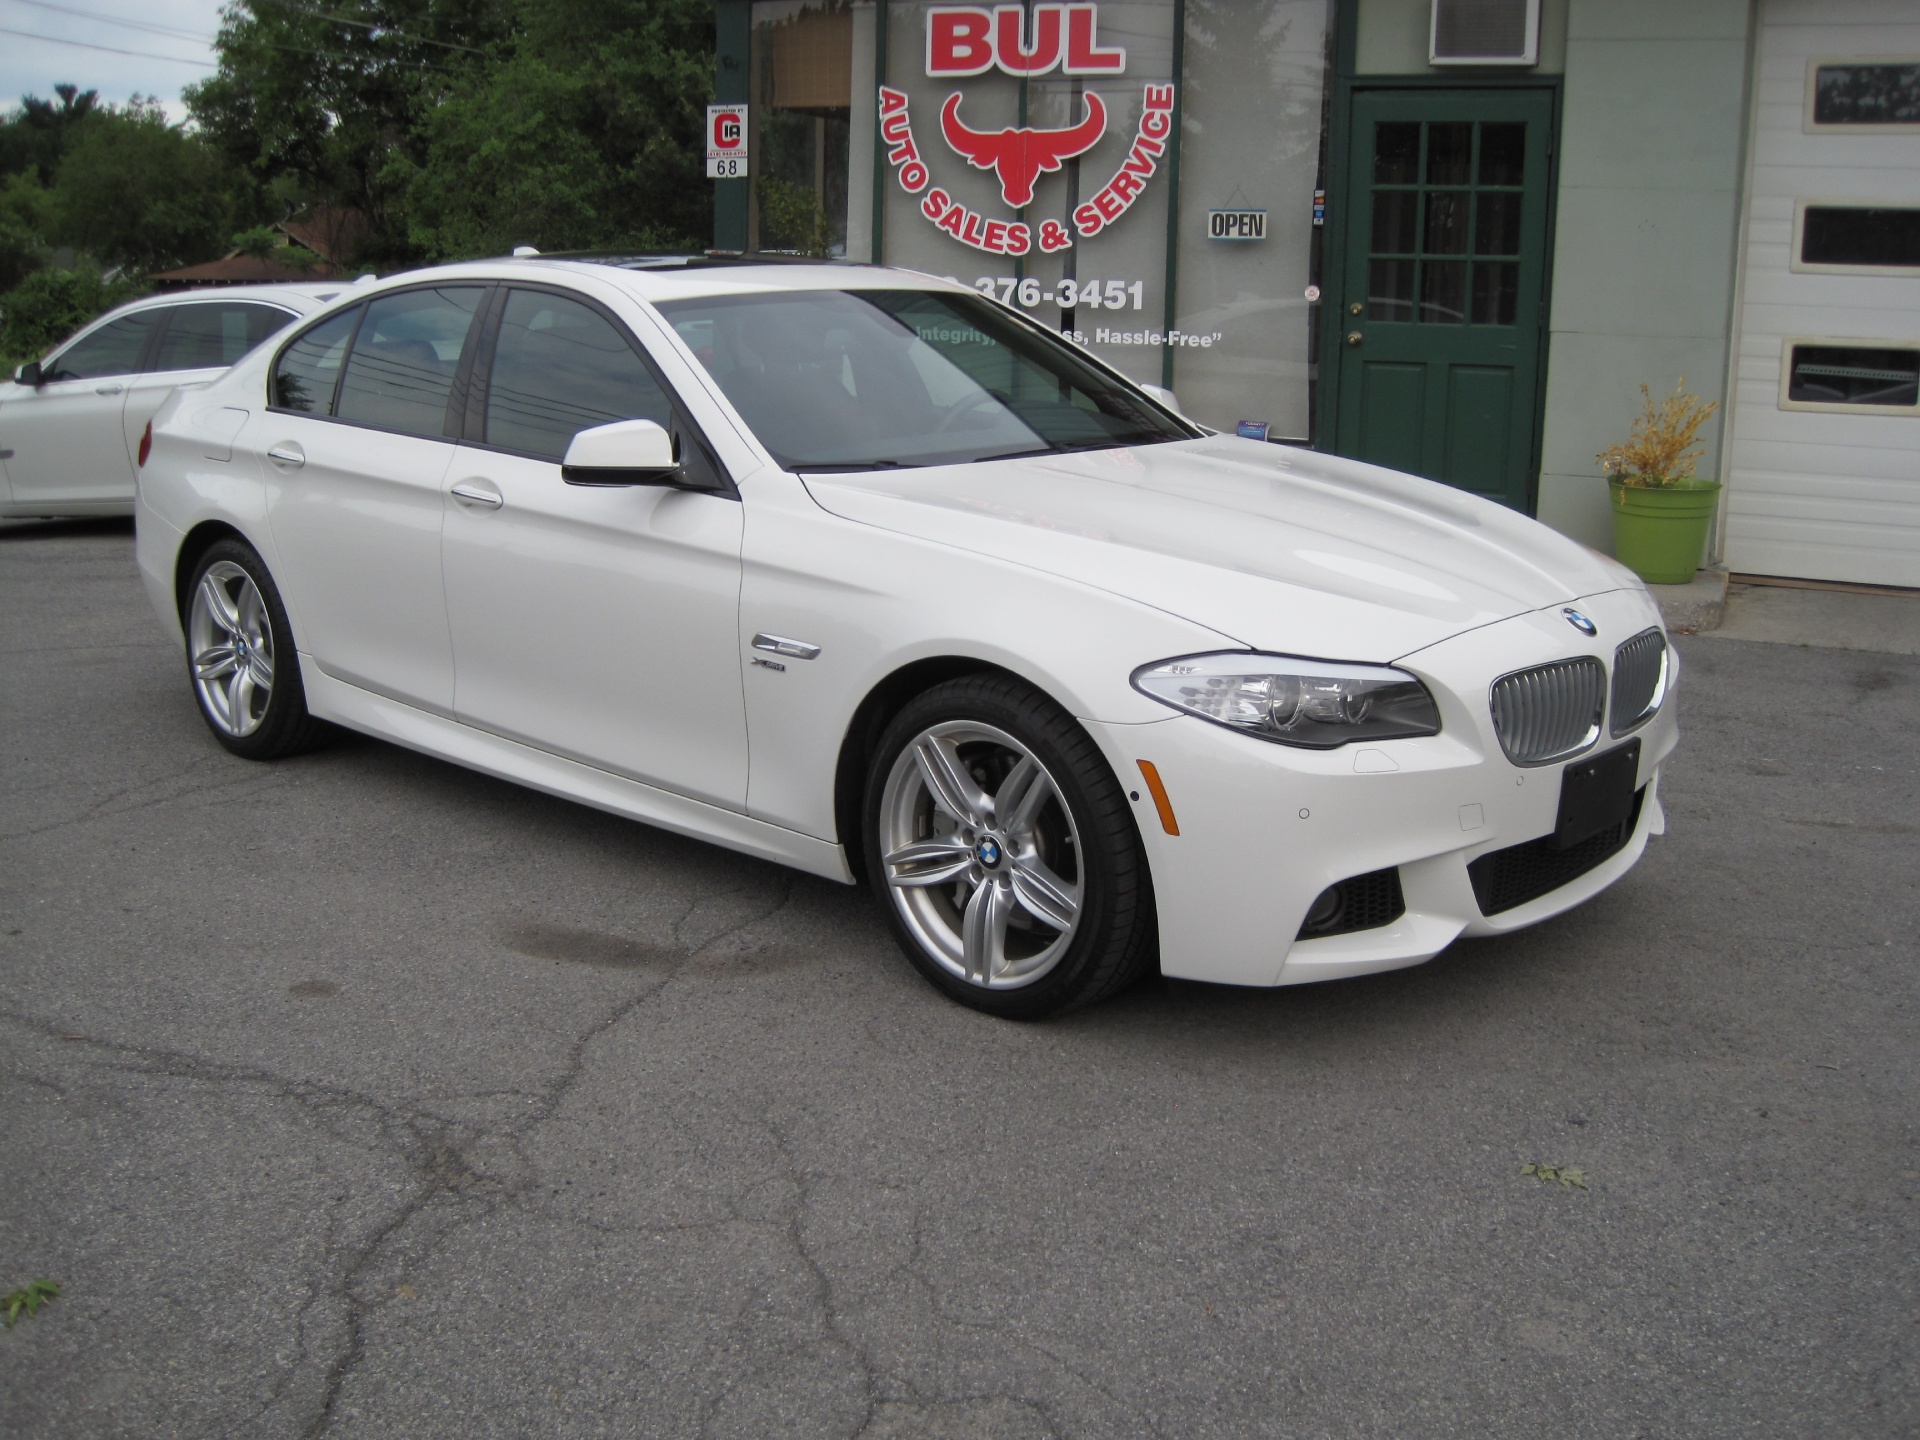 2012 BMW 5 Series For Sale $47990 | 15084 Bul Auto NY